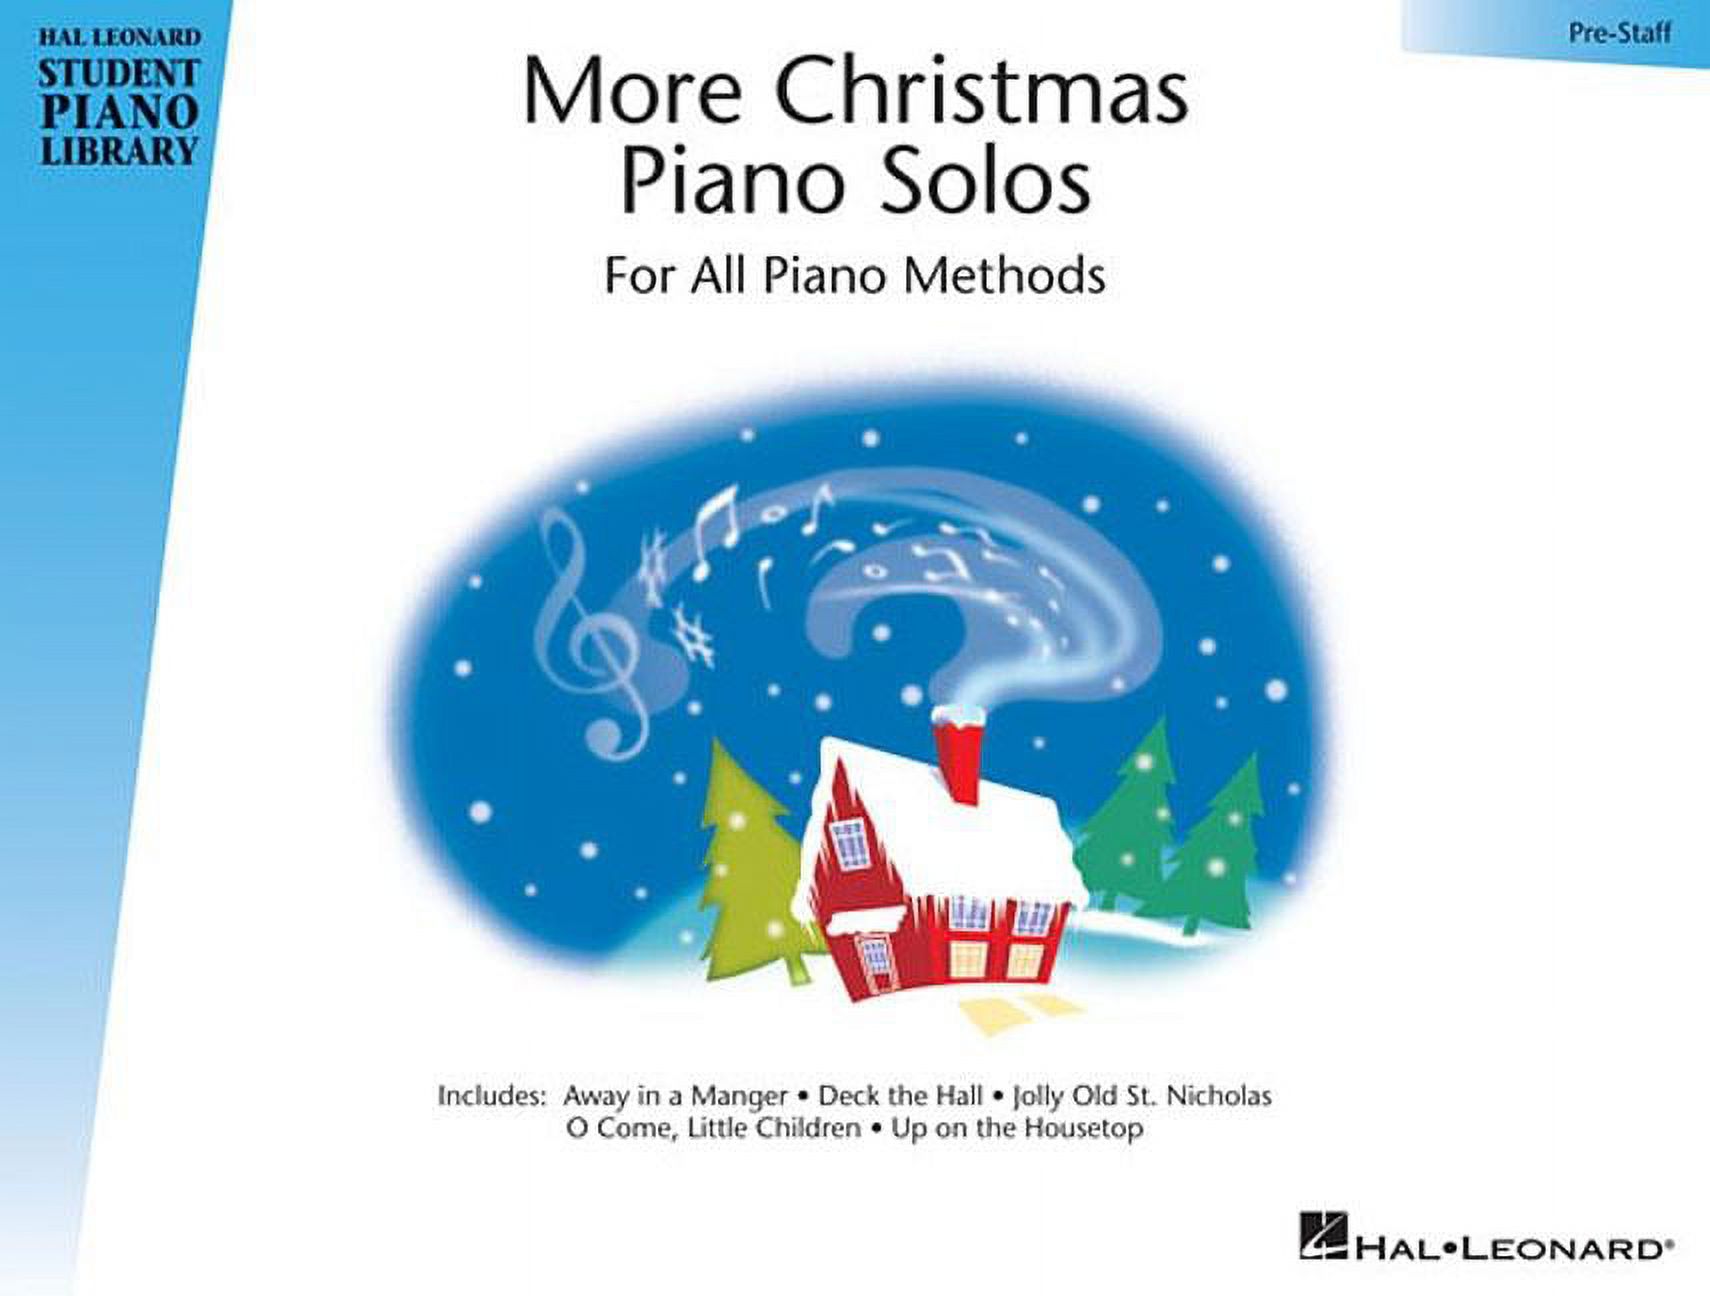 More Christmas Piano Solos - Prestaff Level: Hal Leonard Student Piano Library - image 1 of 2